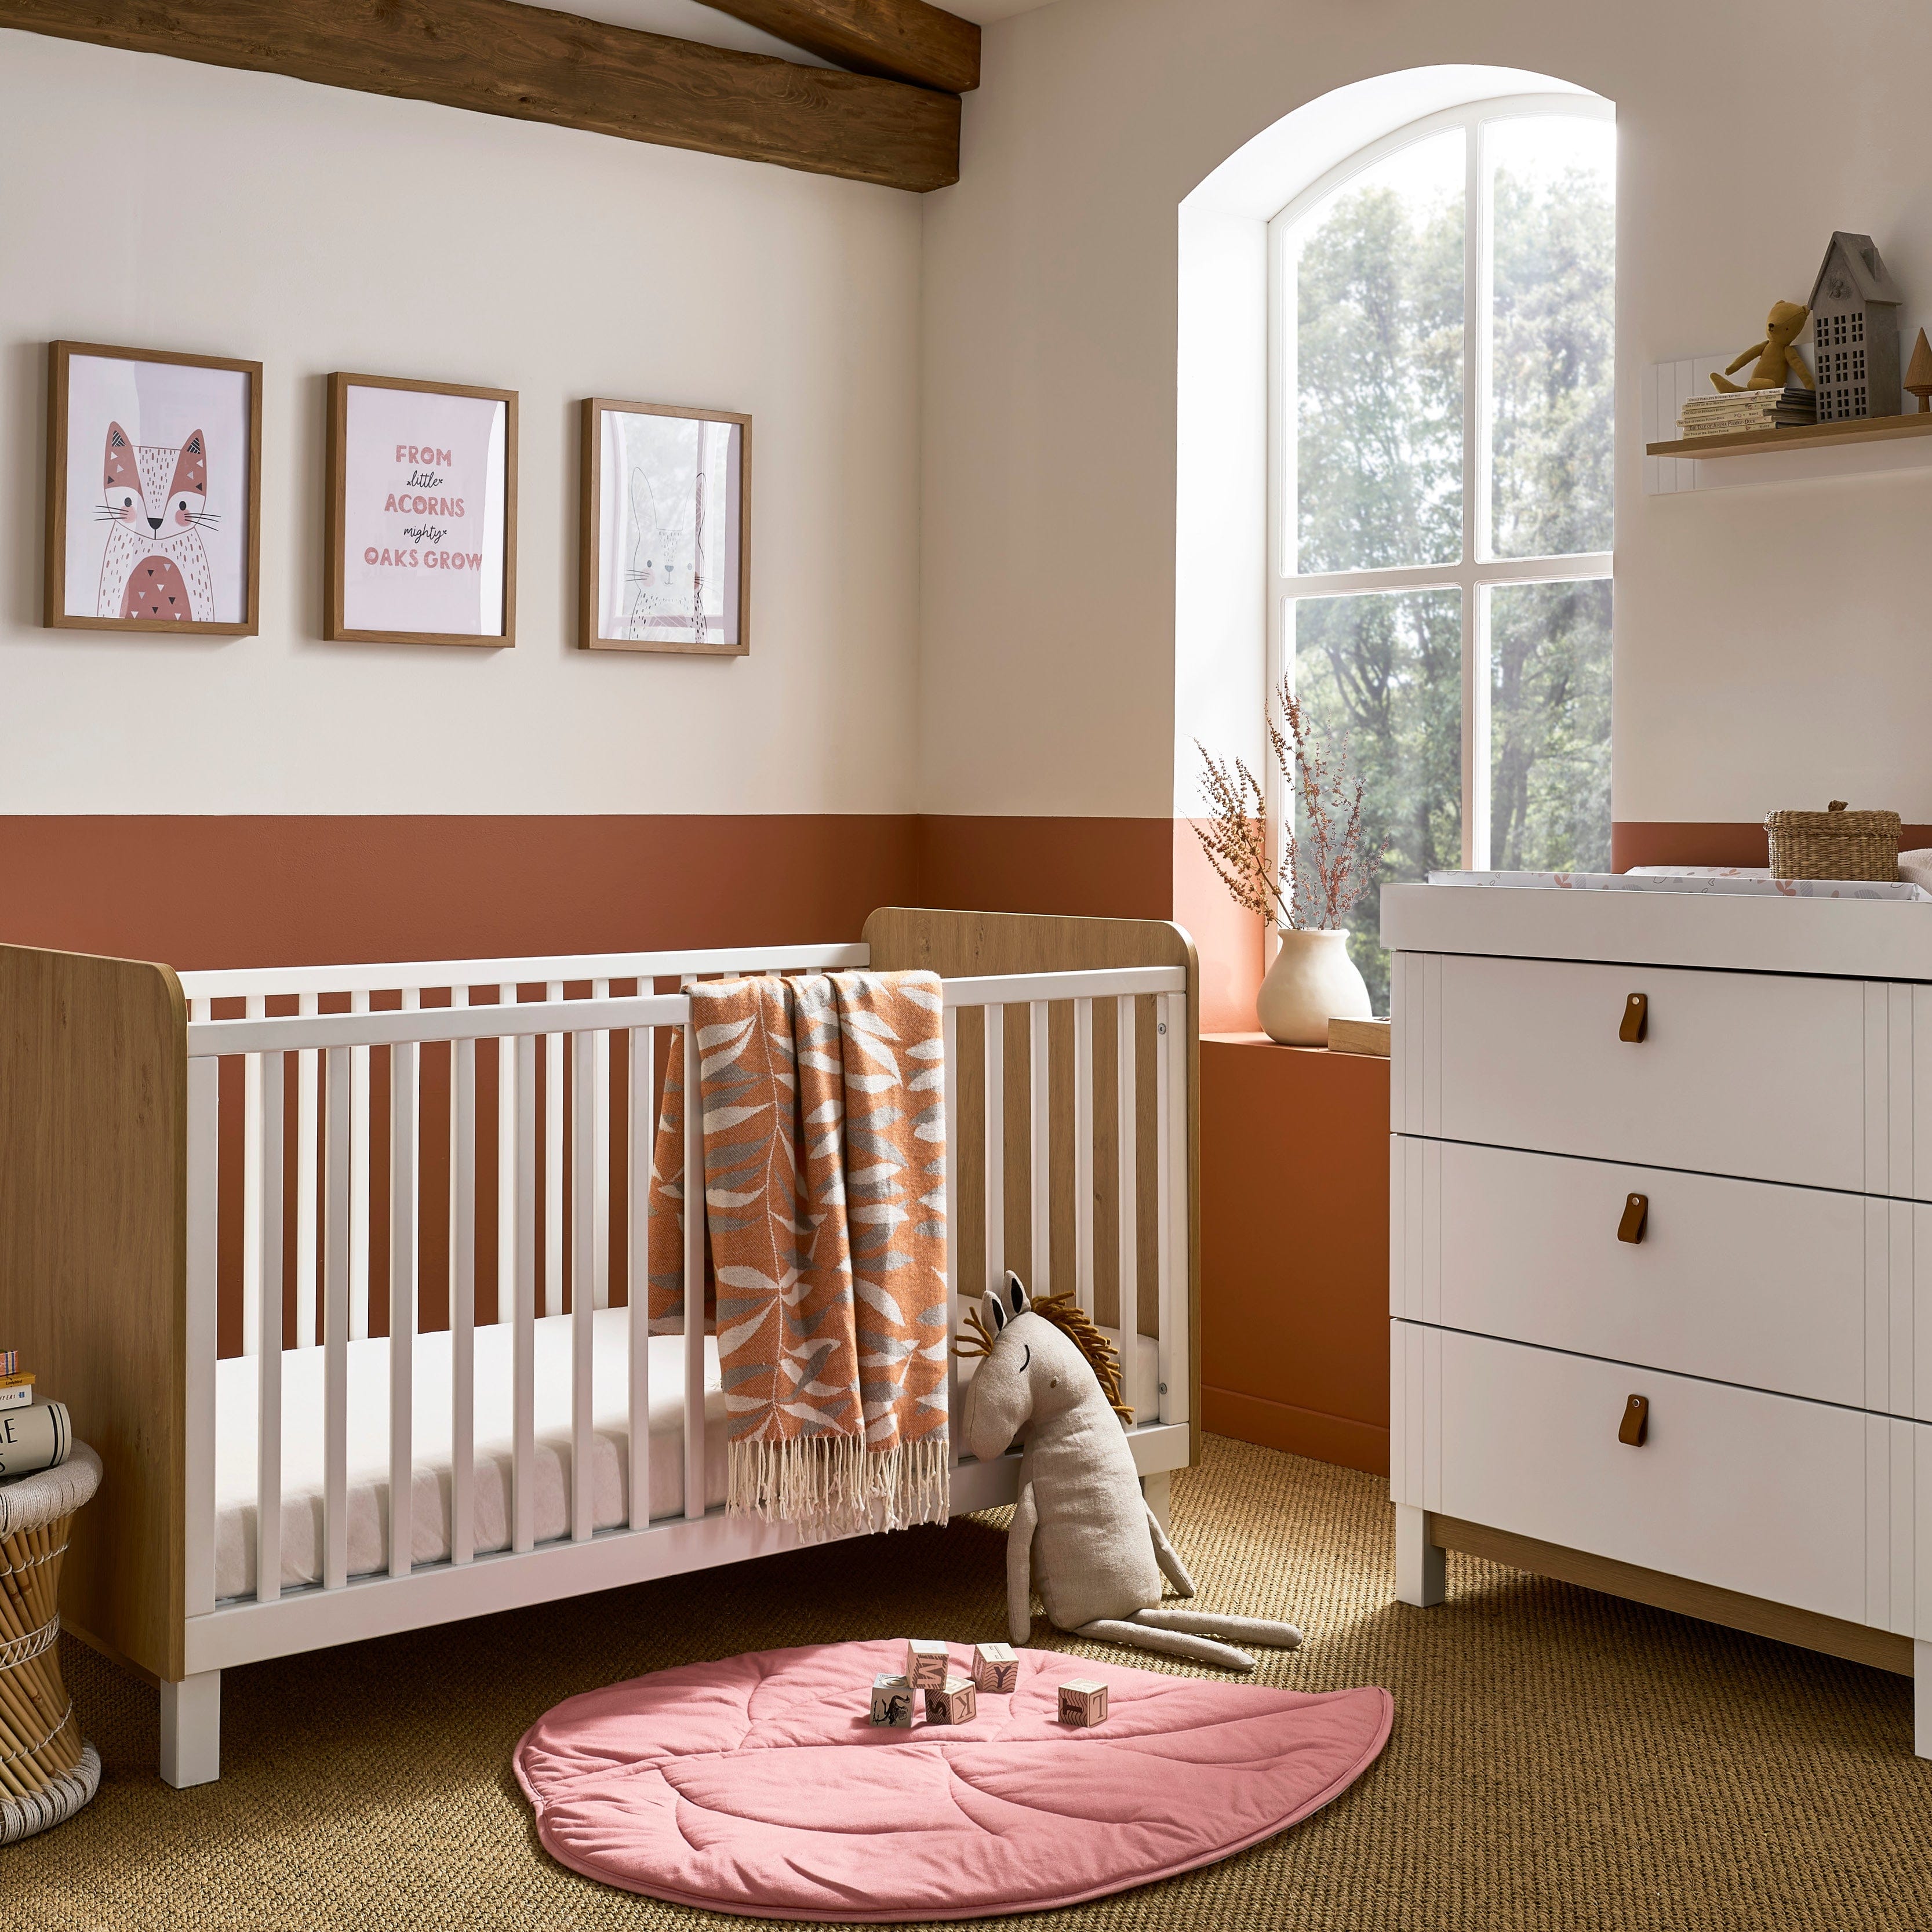 CuddleCo Nursery Room Sets CuddleCo Rafi 2 Piece Room Set in Oak/White